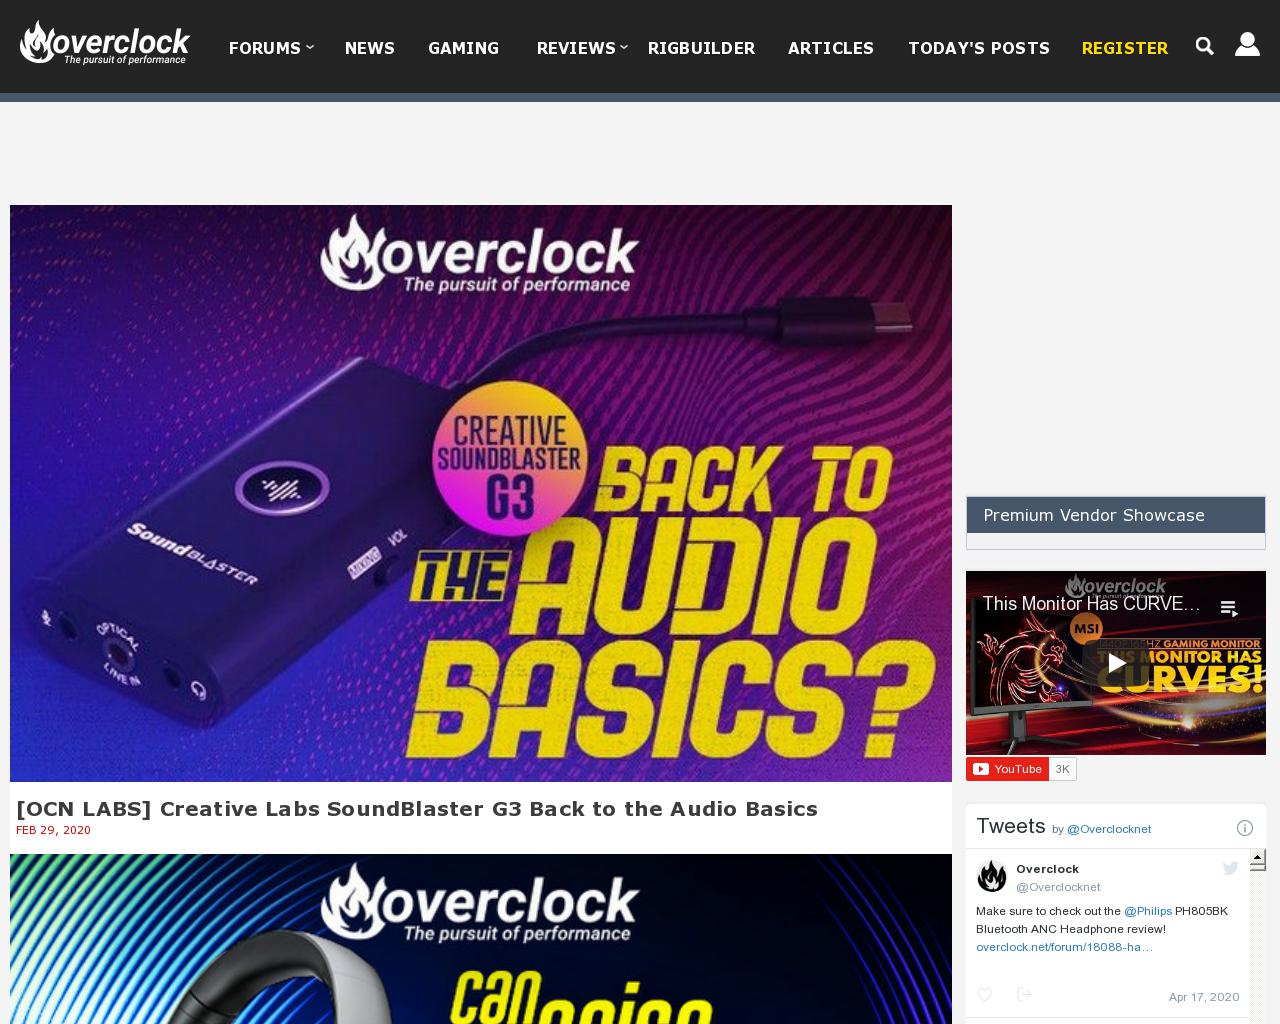 overclock.net